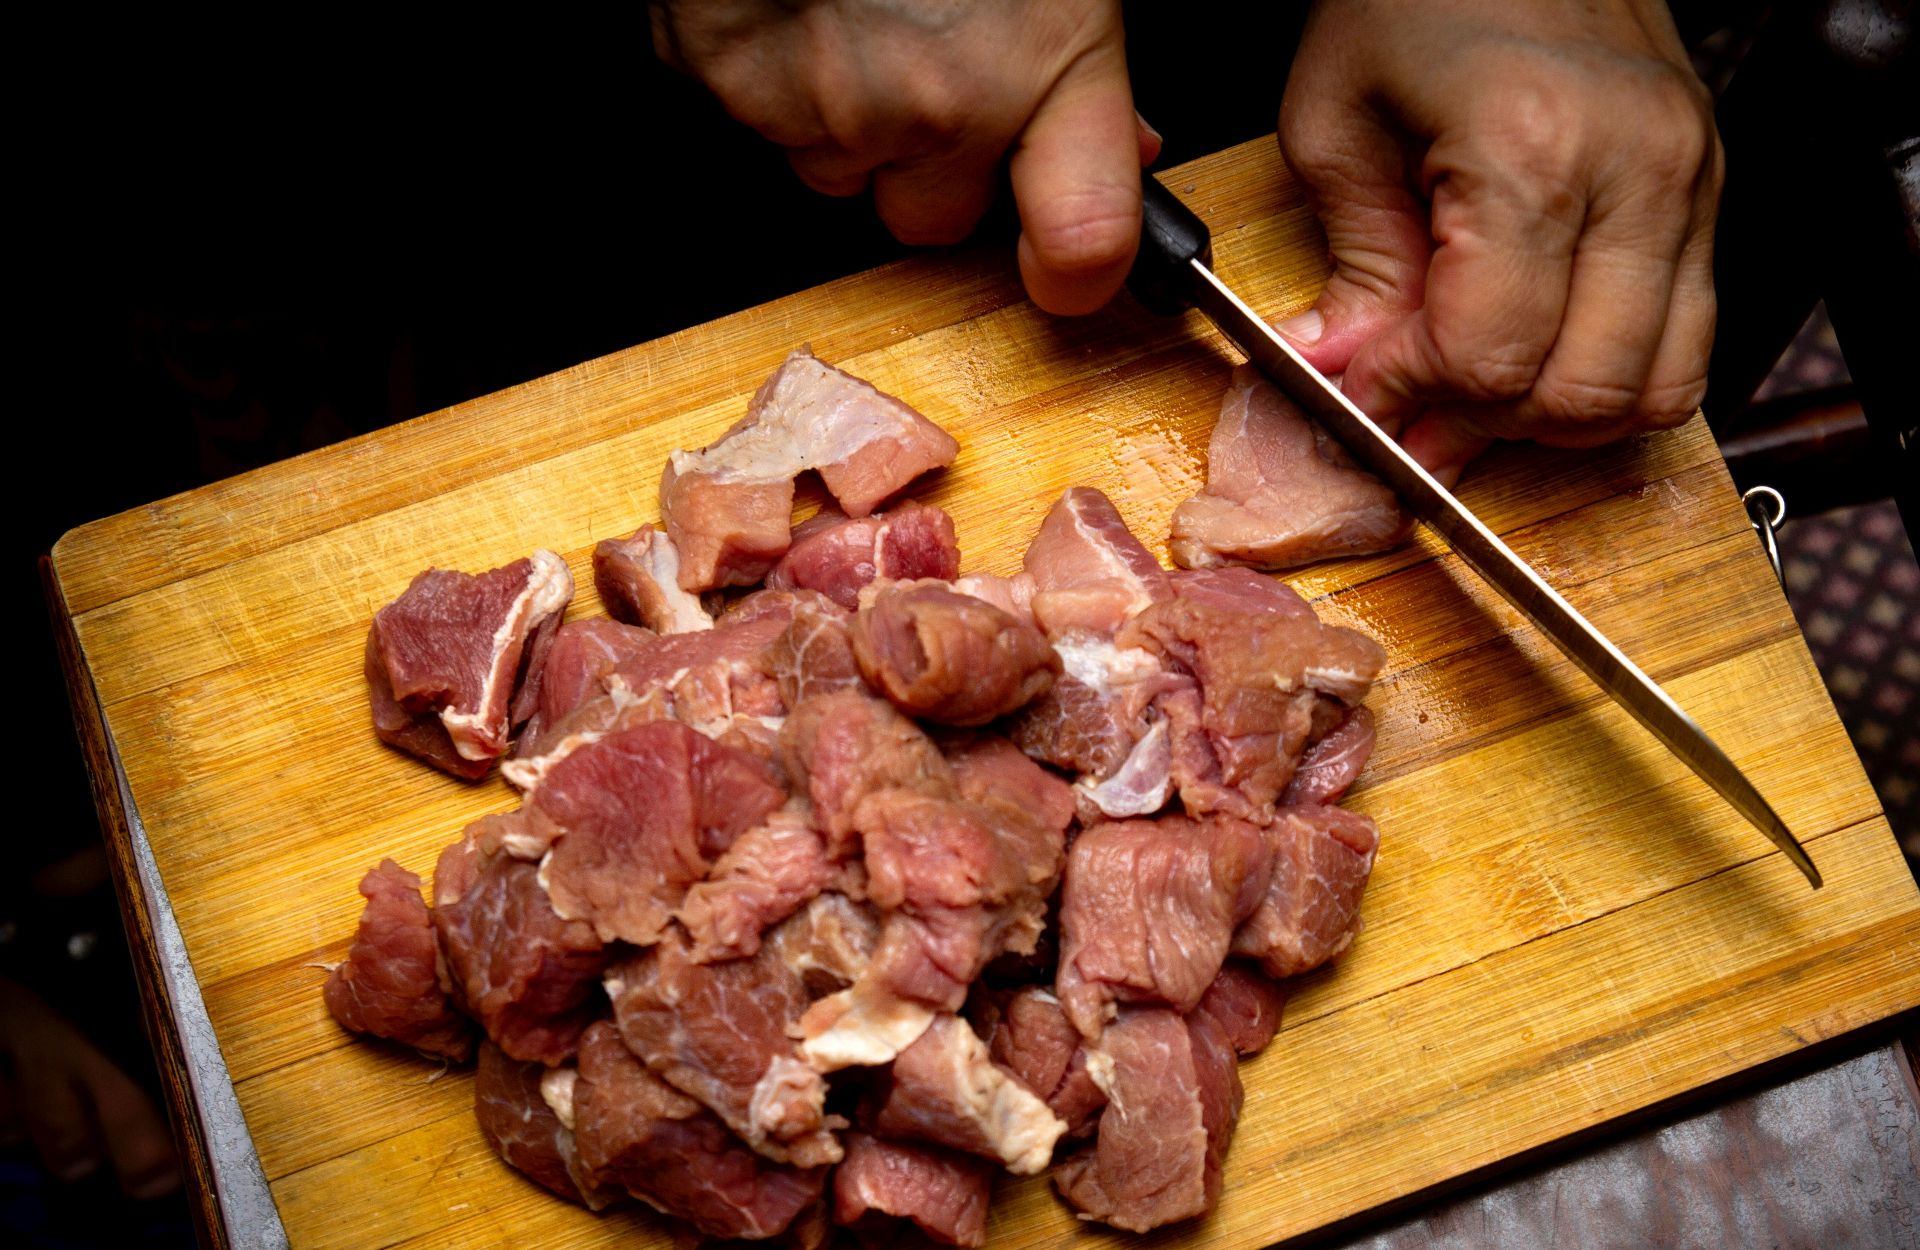 Studiu: consumul excesiv de carne roșie crește riscul de cancer colorectal